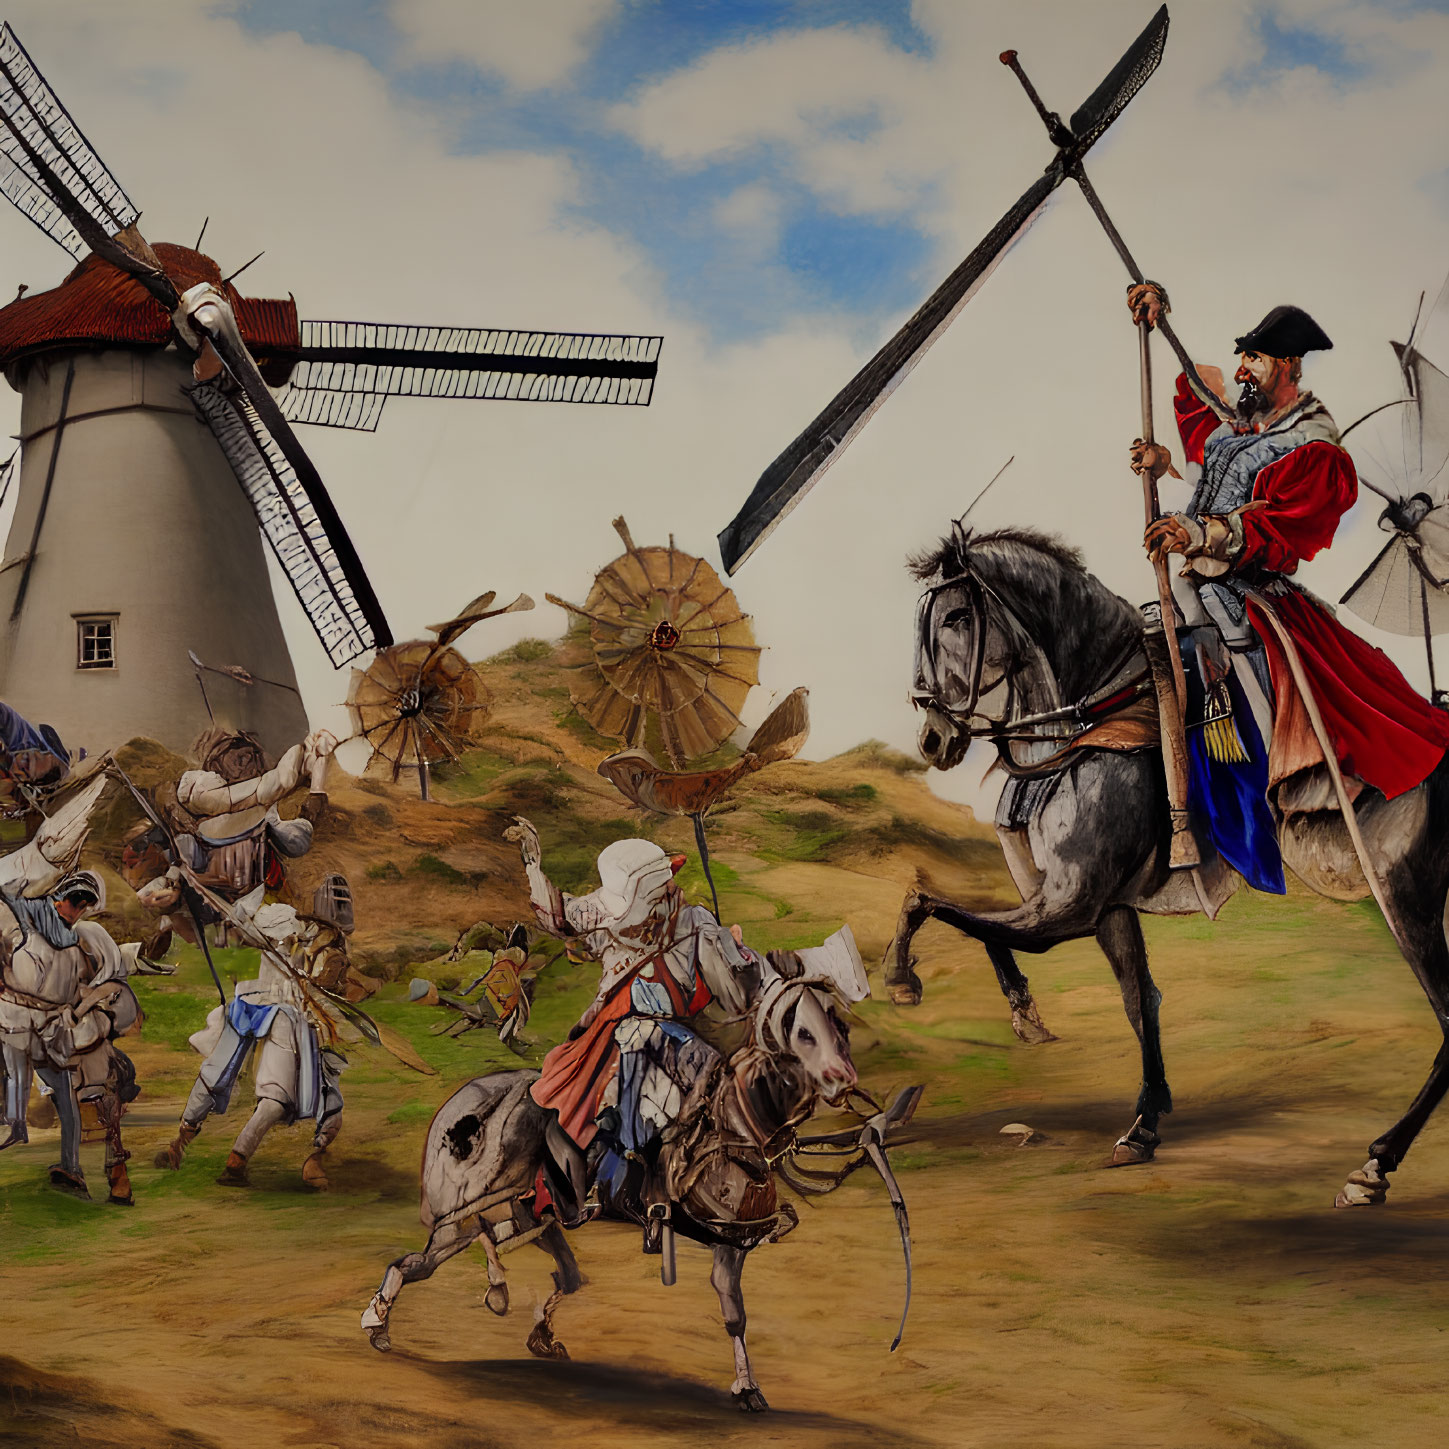 Medieval knight on horseback attacks windmills in a scene reminiscent of Don Quixote